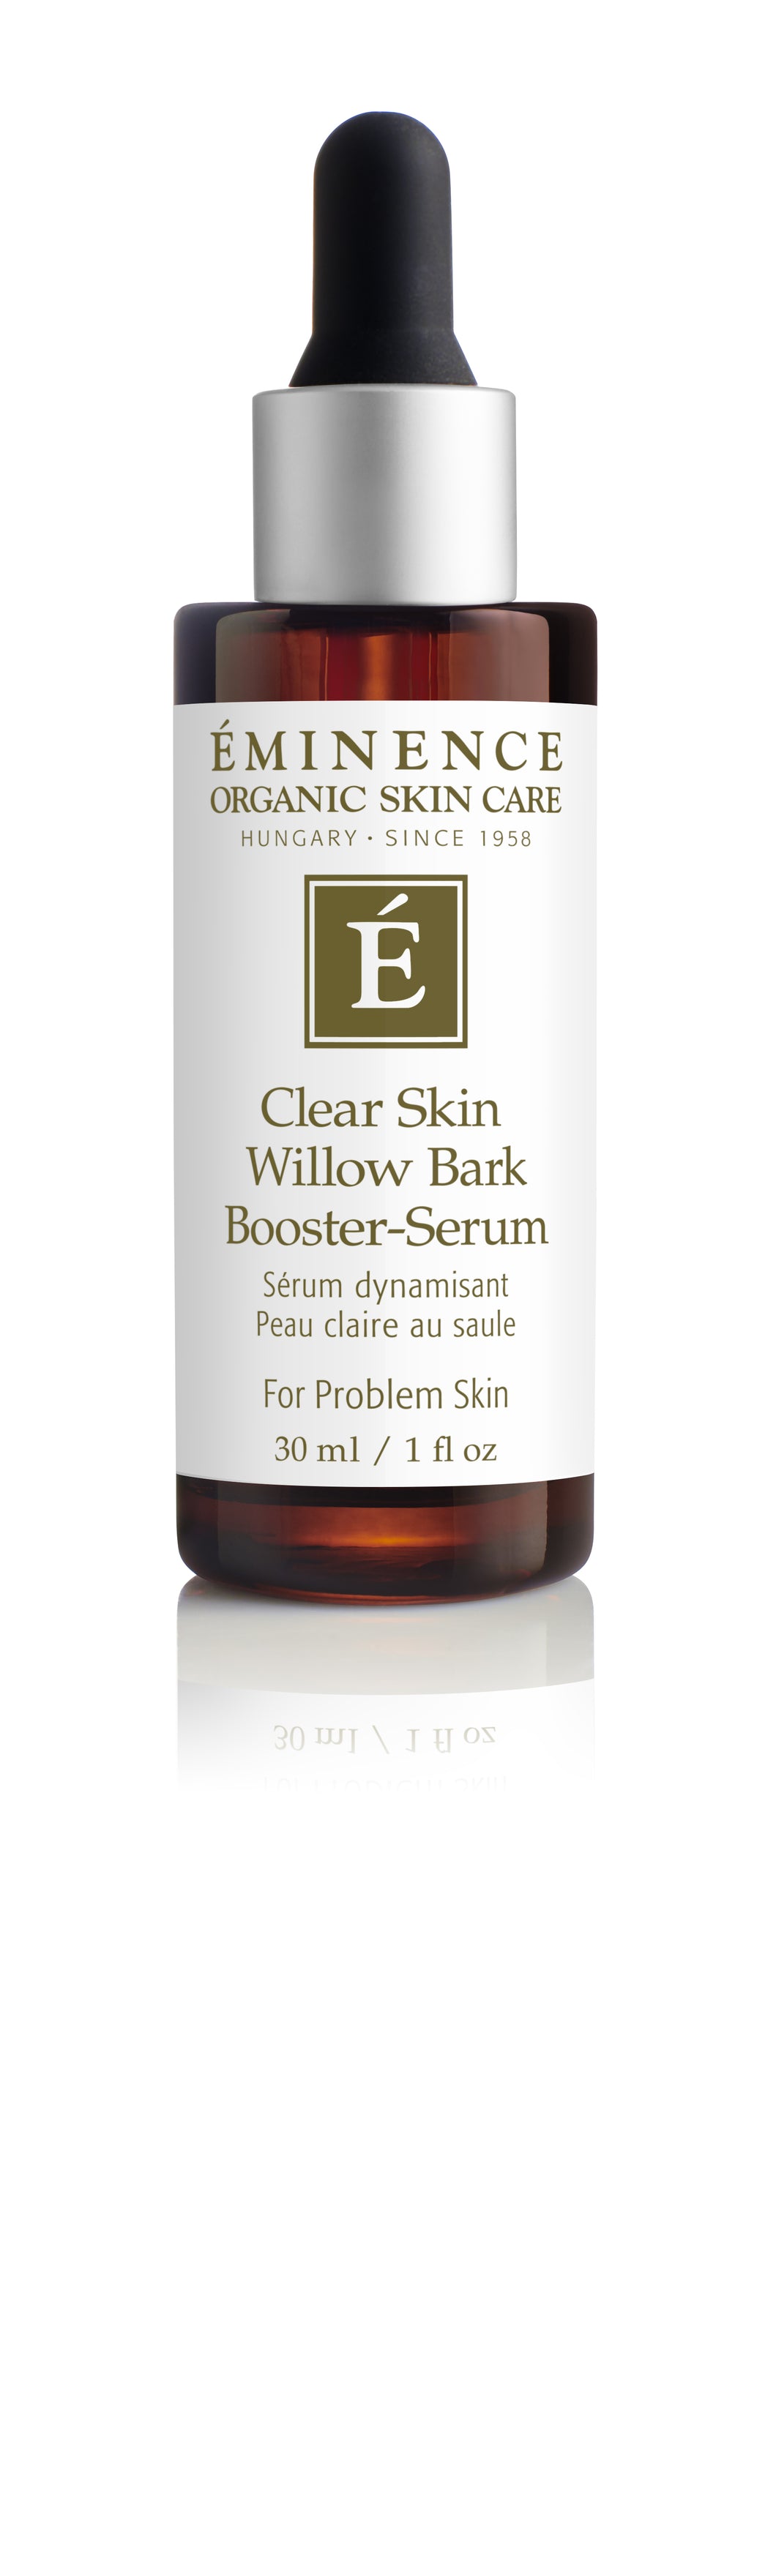 Eminence: Clear Skin Willow Bark Booster-Serum